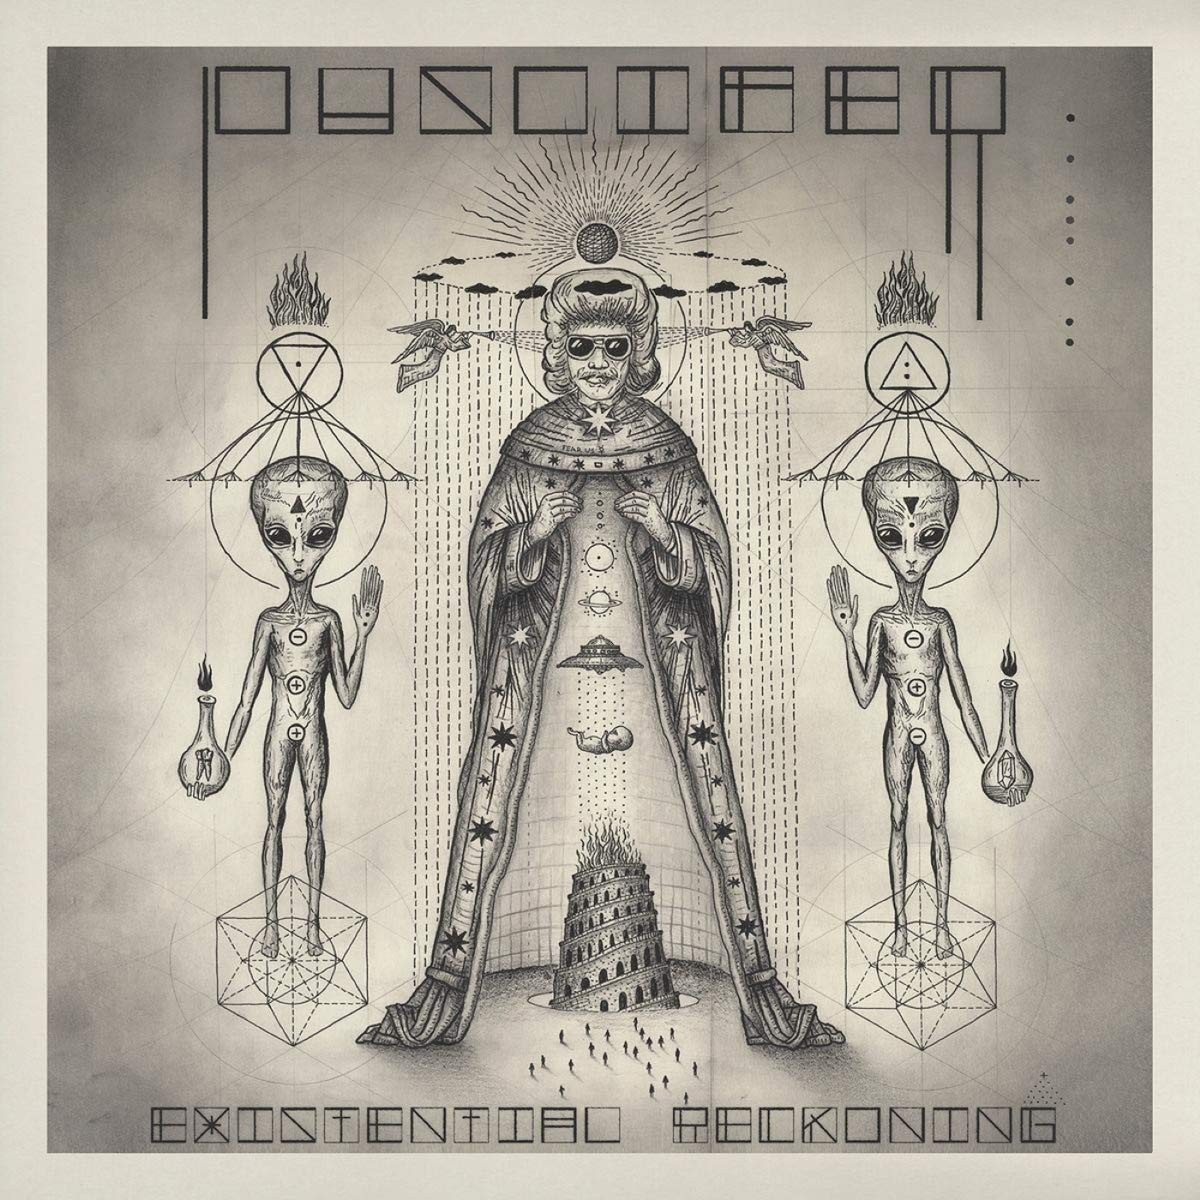 Puscifer - Existential Reckoning Vinyl LP